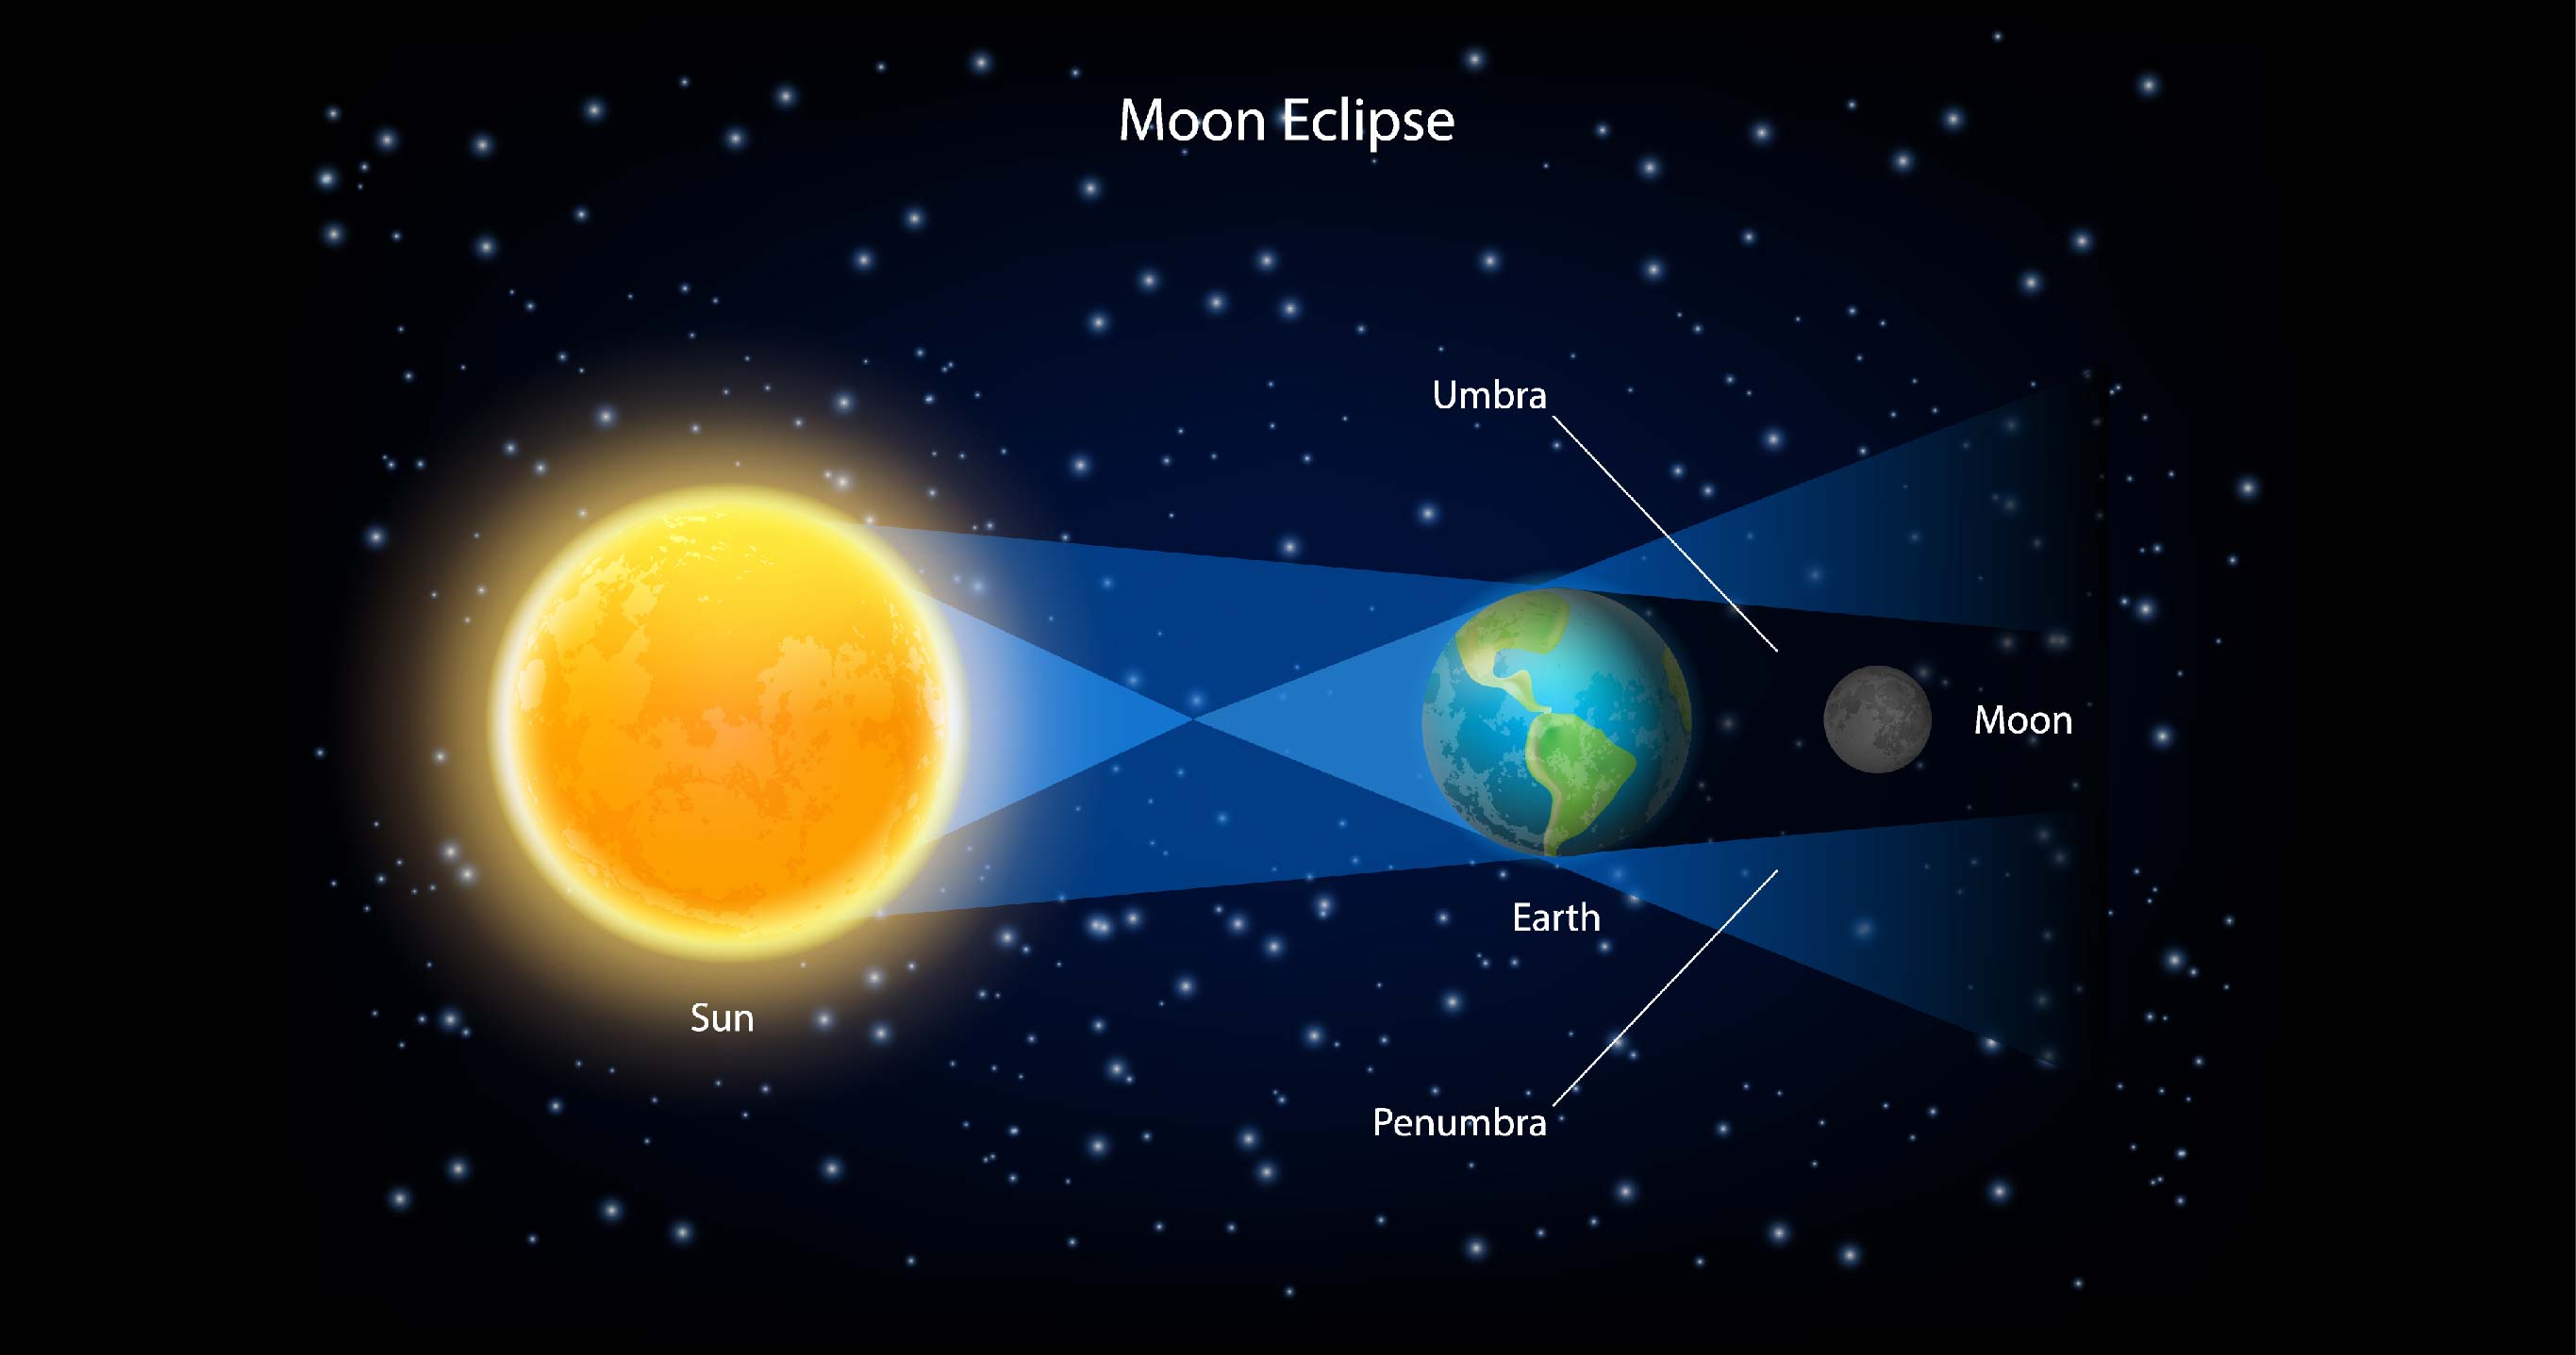 Chandra Grahan Moon Eclipse 20/21 January 2019 Ishwar Maharaj